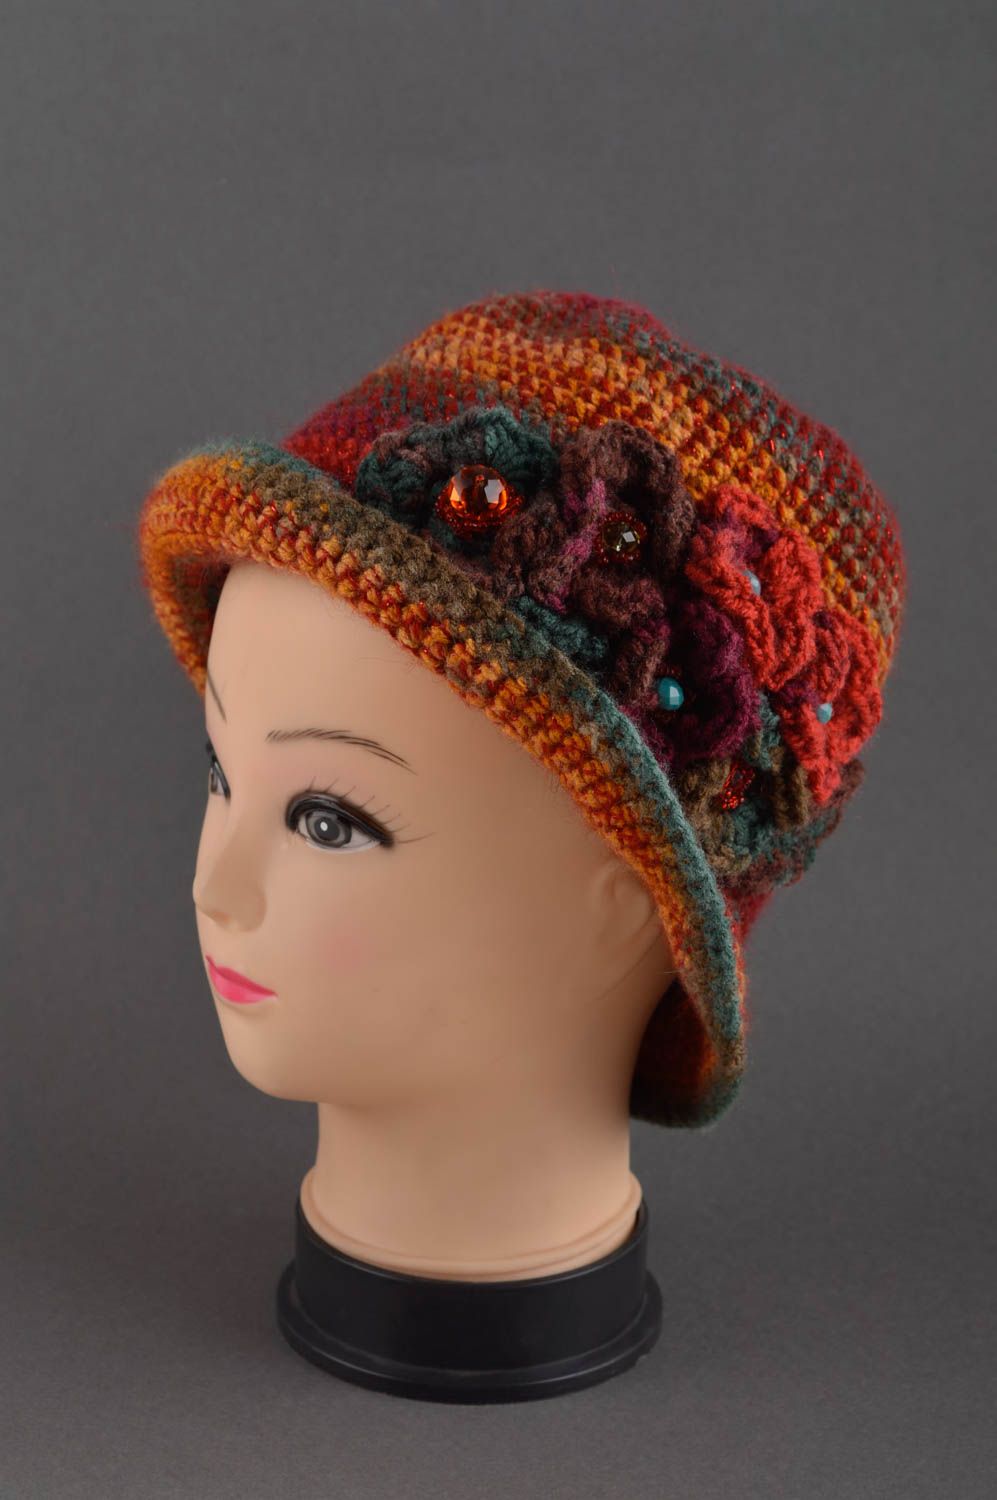 Handmade crochet hat fashion accessories ladies hat best gifts for women photo 1